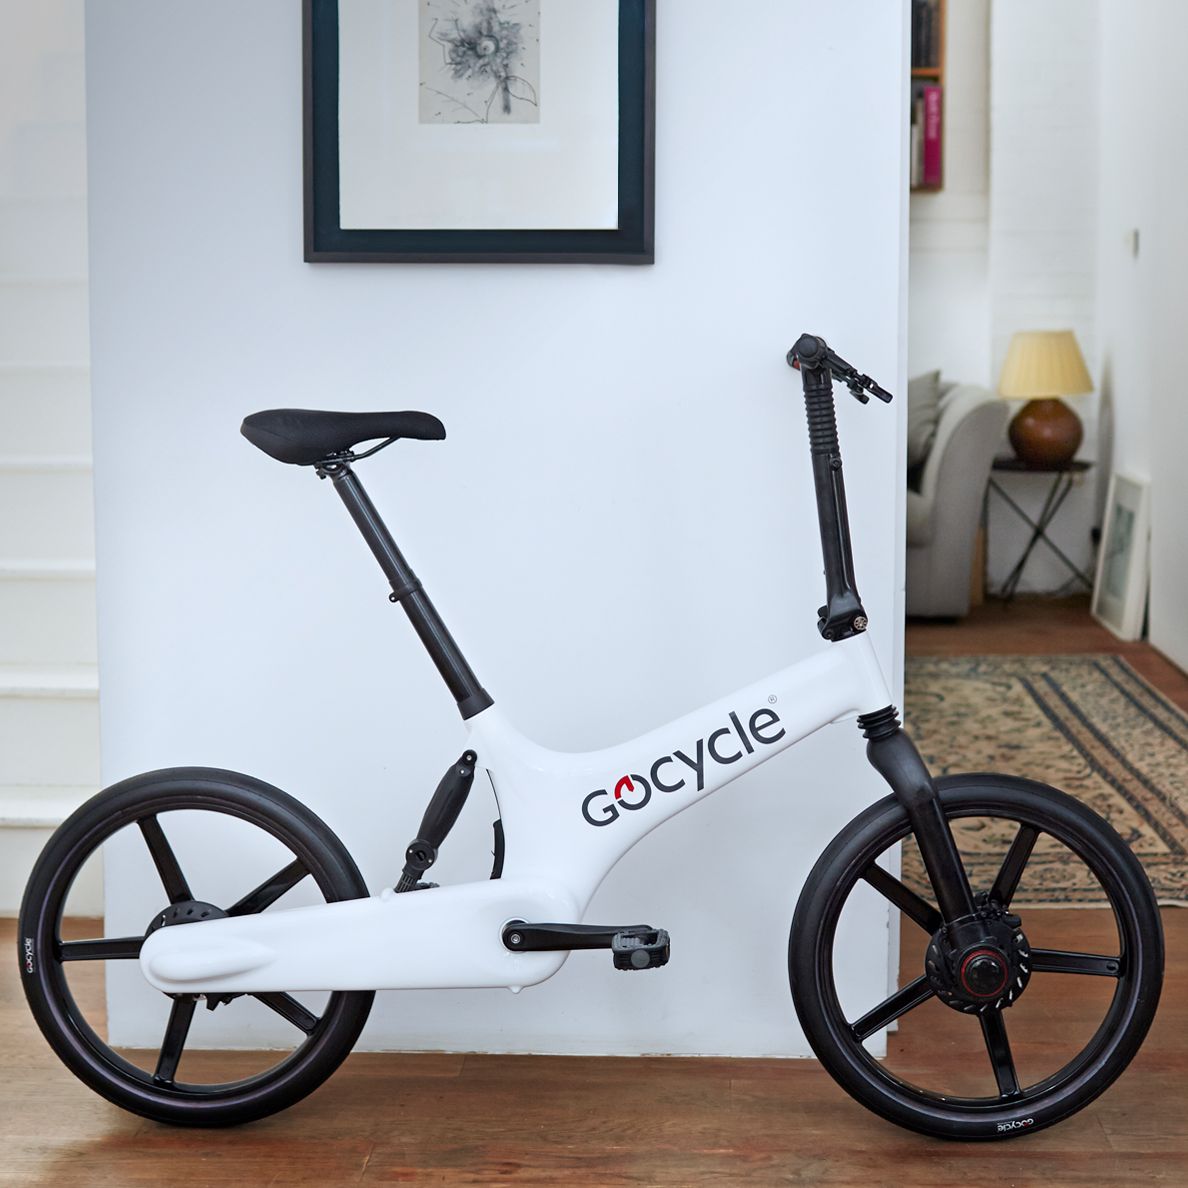 gocycle ebike